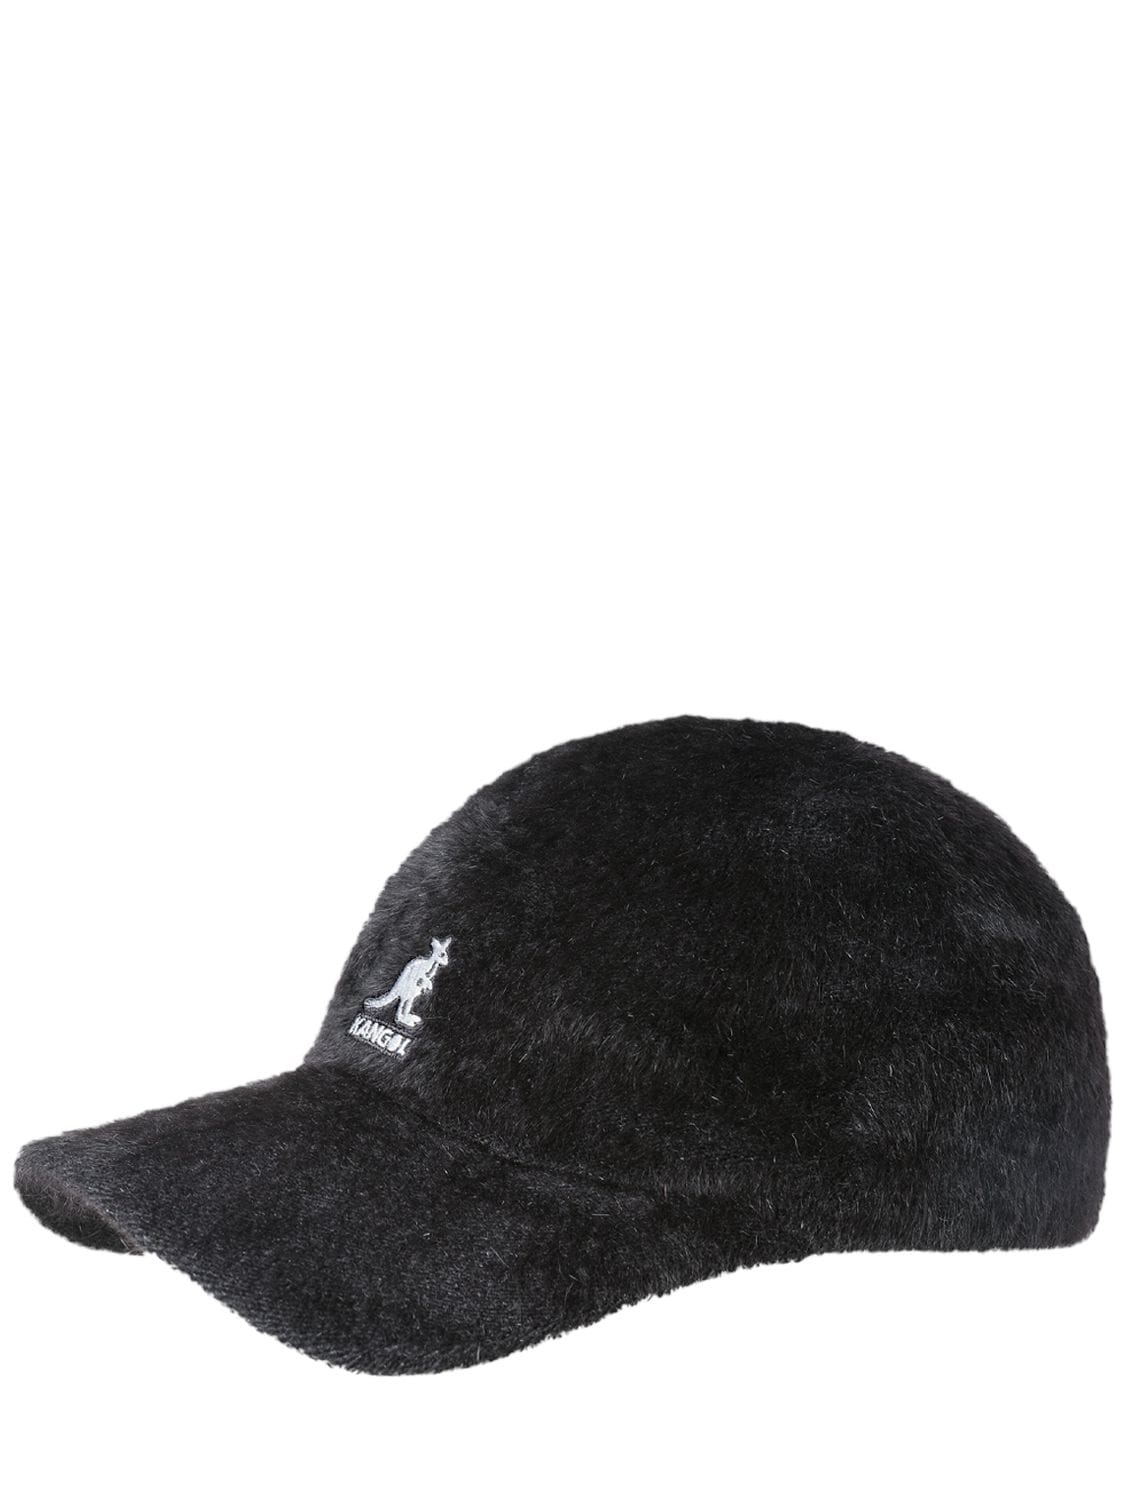 Kangol Furgora Casual Angora Blend Baseball Cap In Black